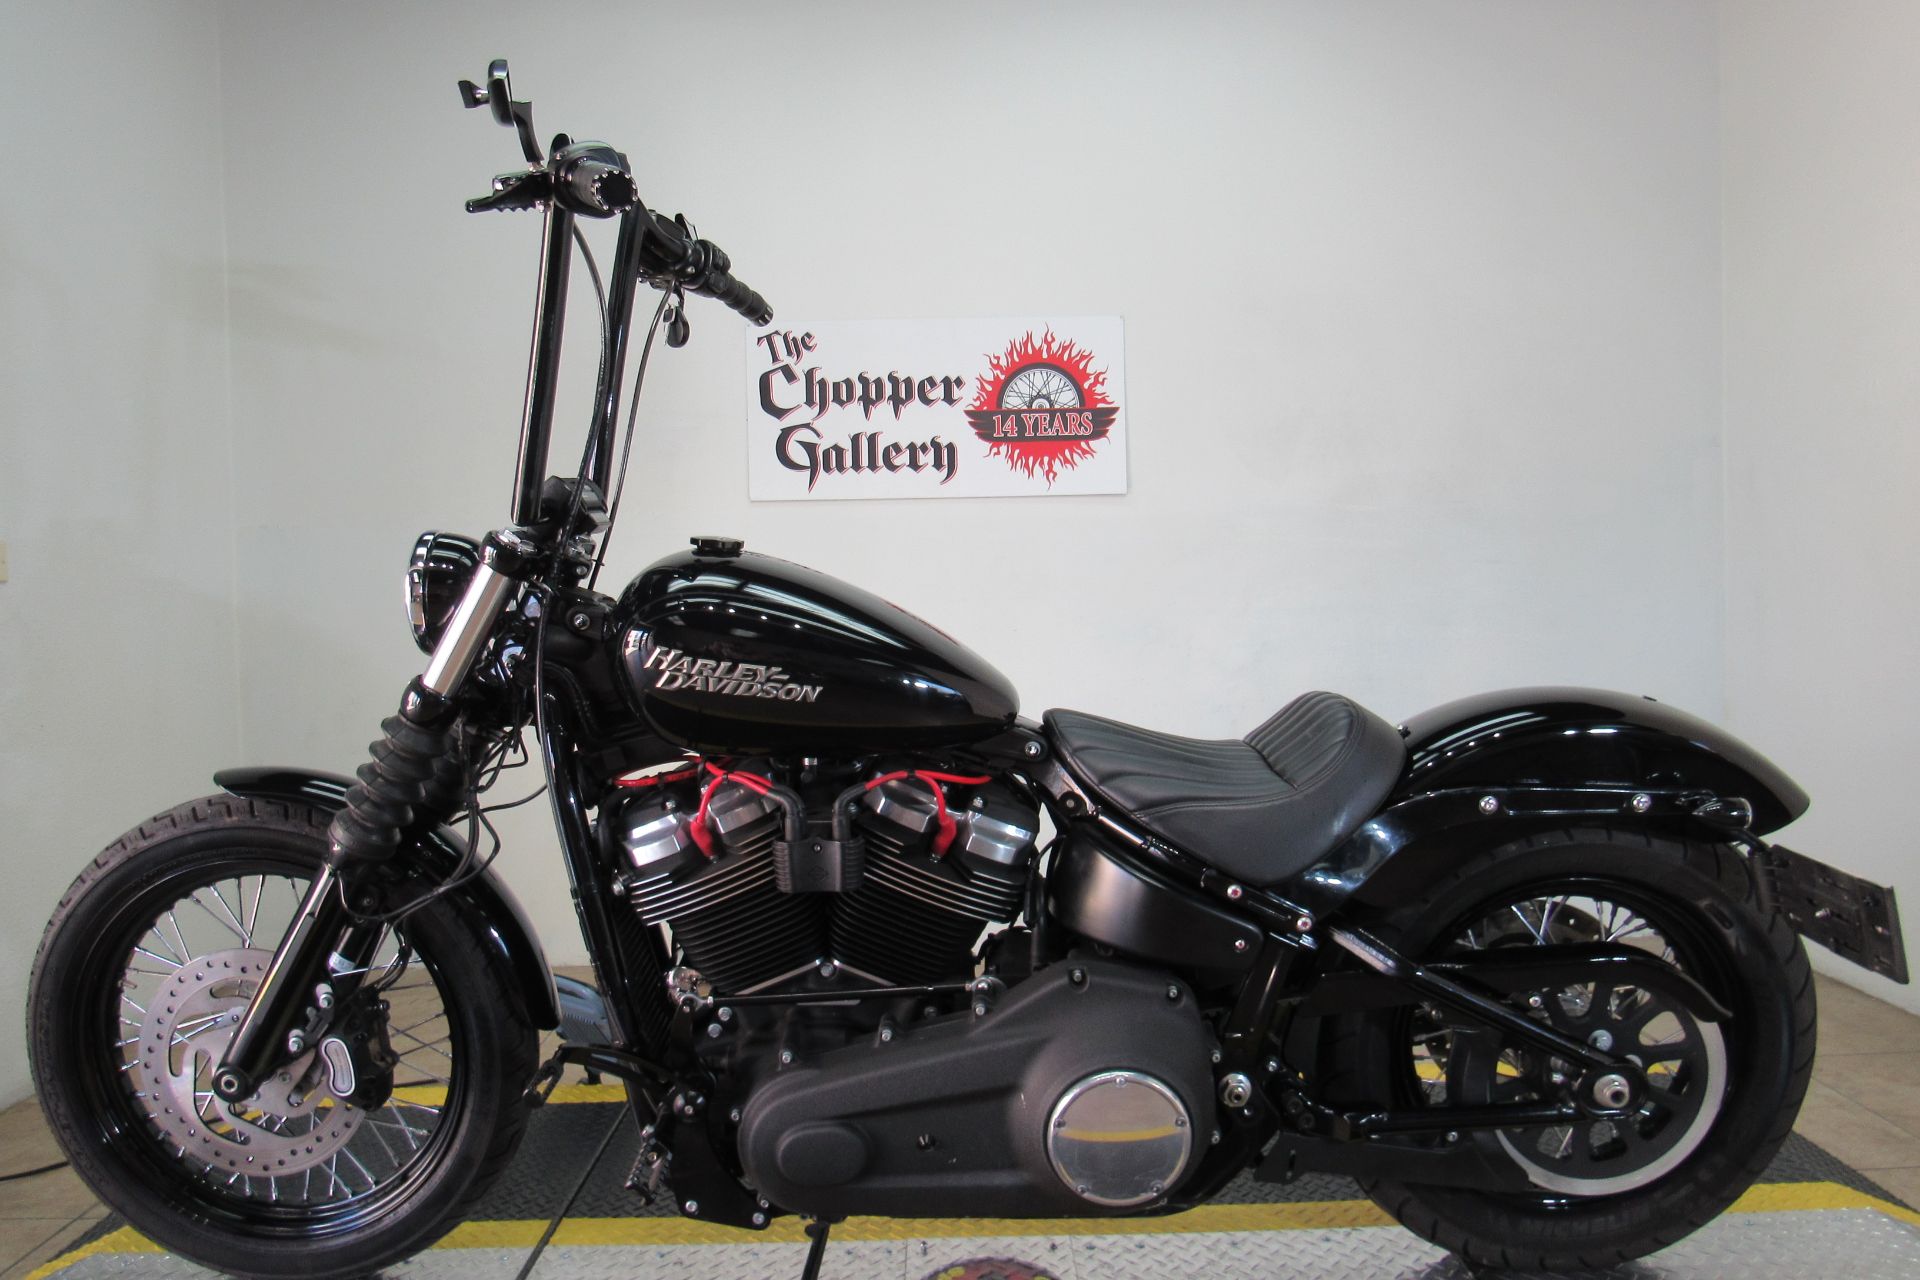 2020 Harley-Davidson Street Bob® in Temecula, California - Photo 2